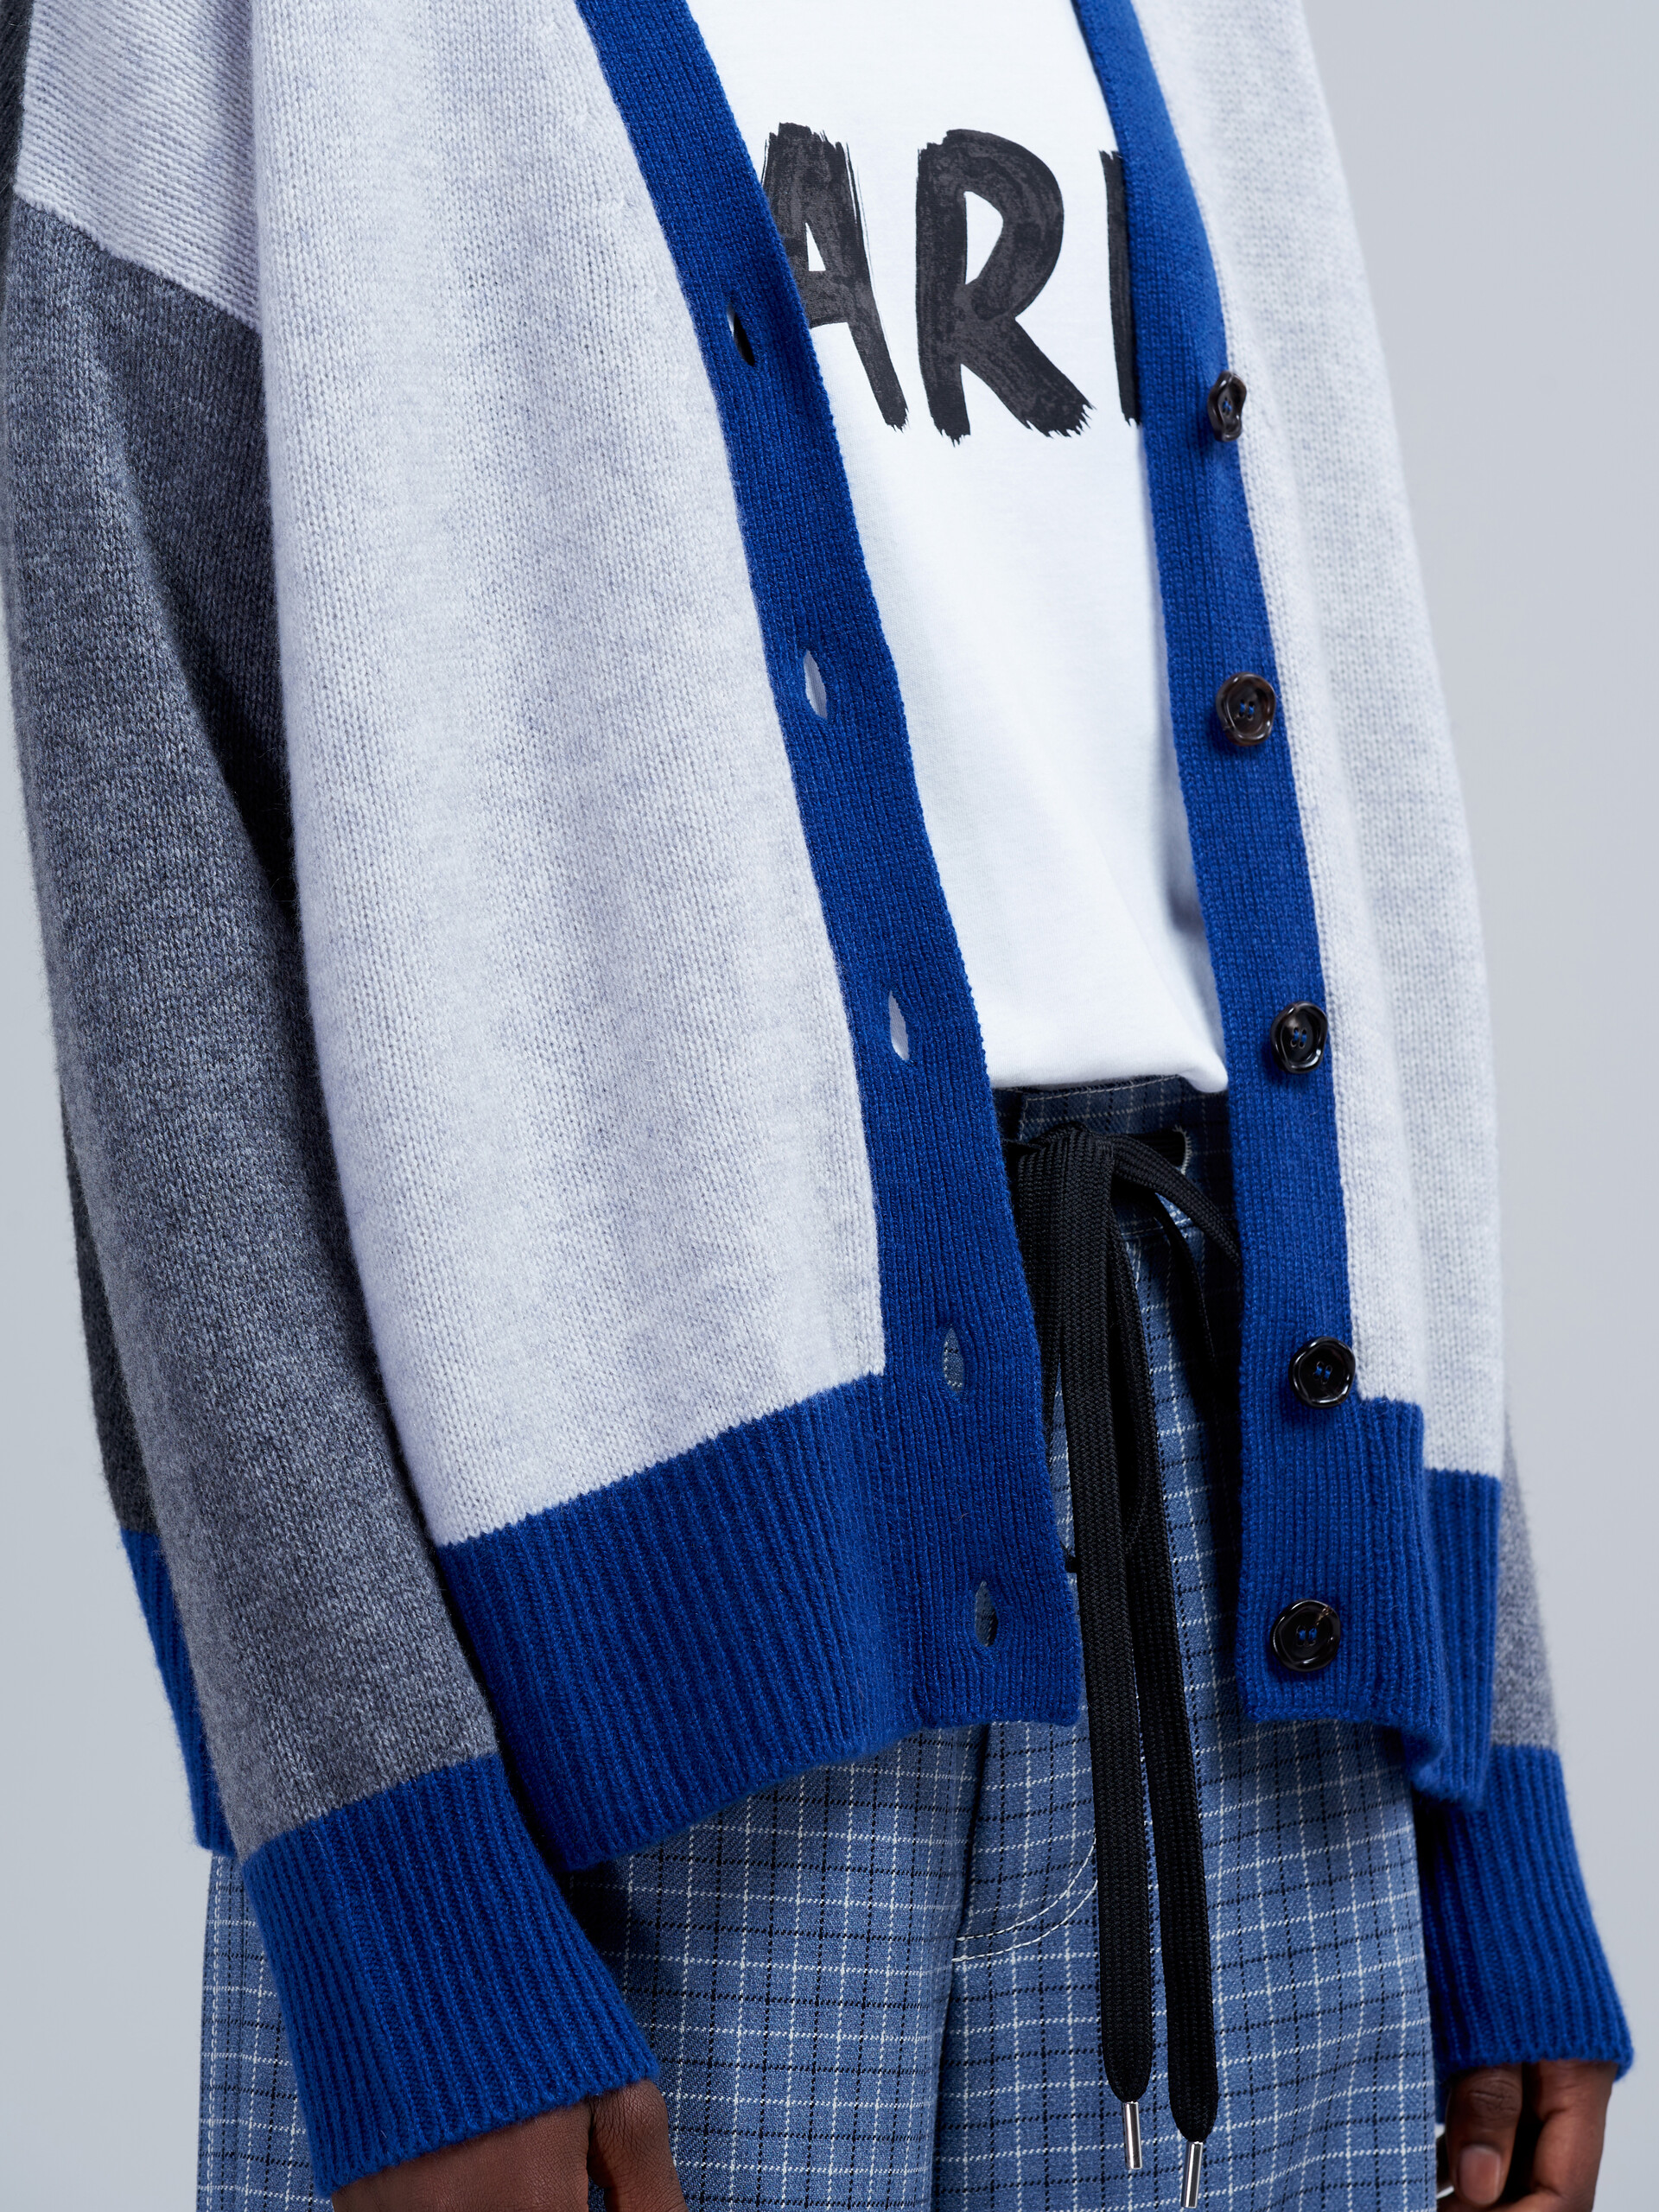 Iconic cashmere colourblock cardigan - Pullovers - Image 4